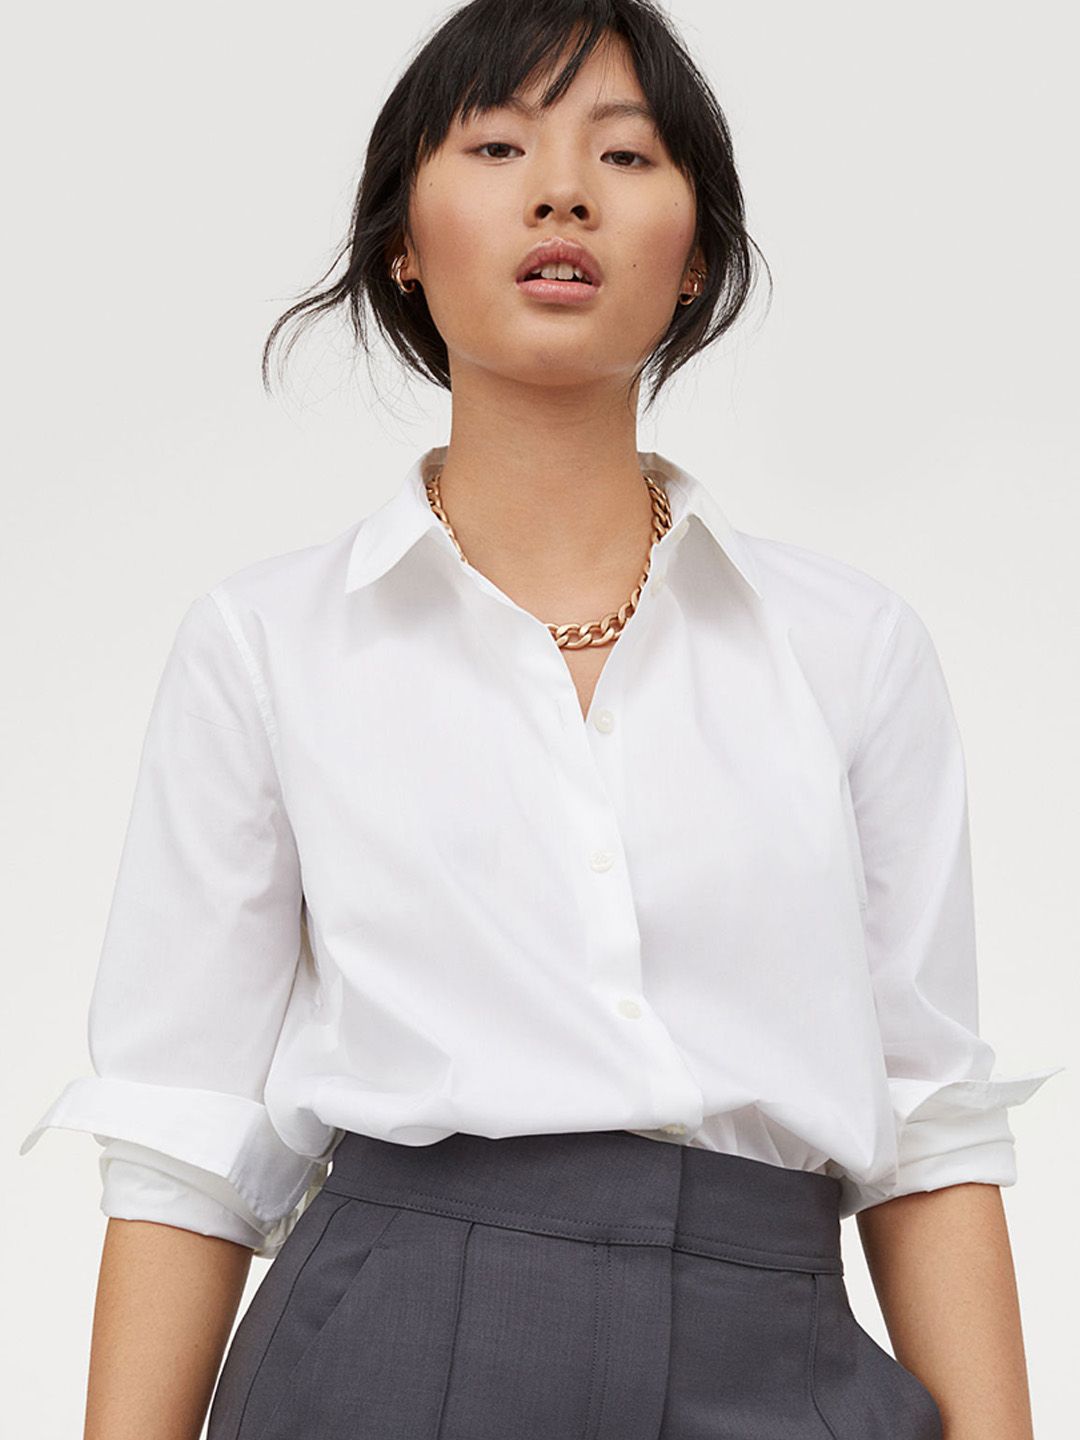 H&M Women White Formal Shirt Price in India